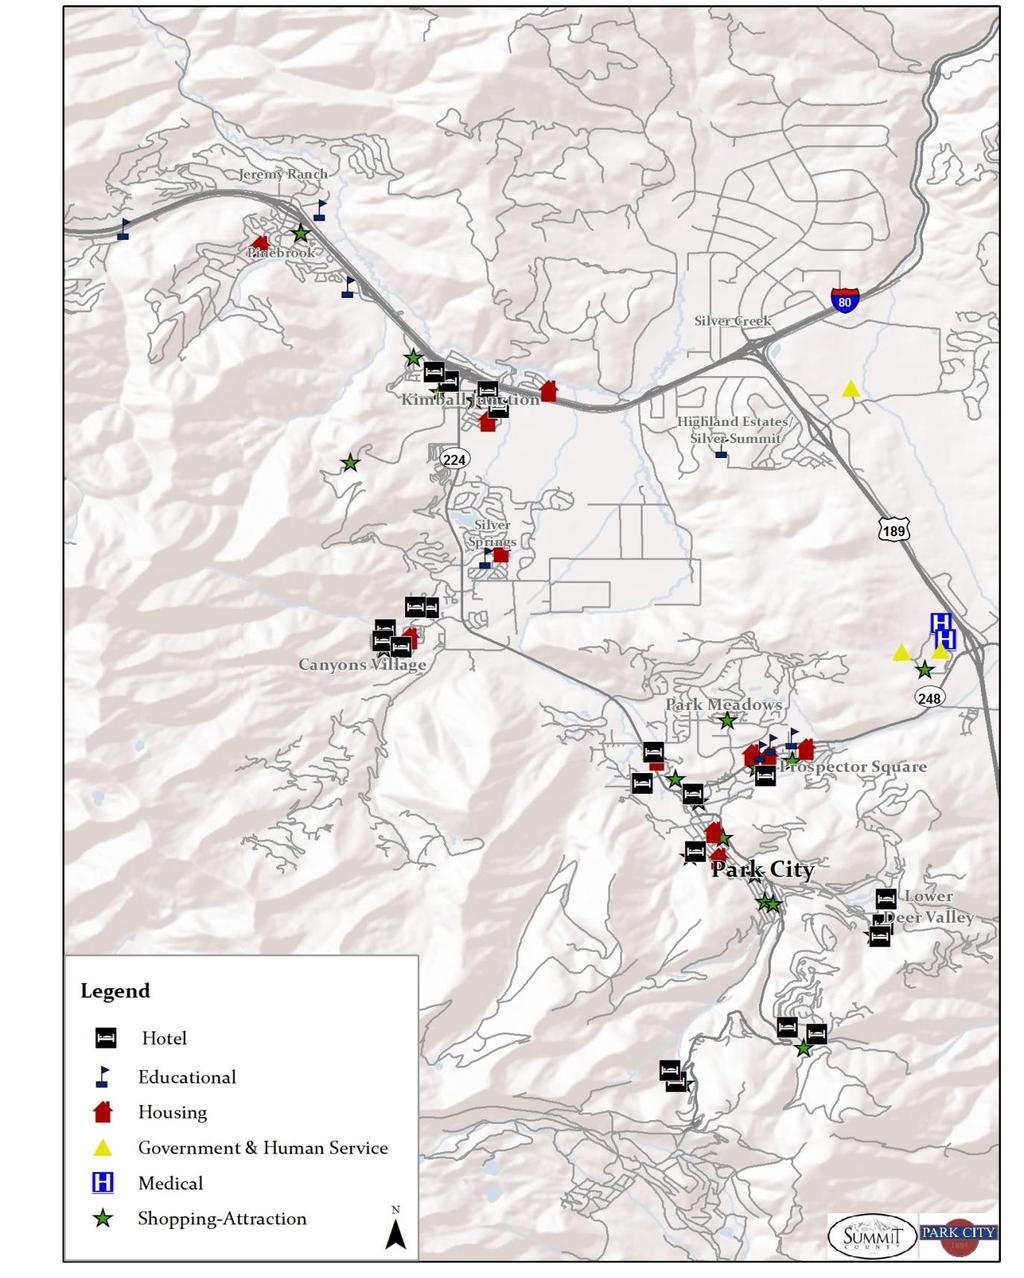 Transit Demand Analysis Figure 4-3: Park City